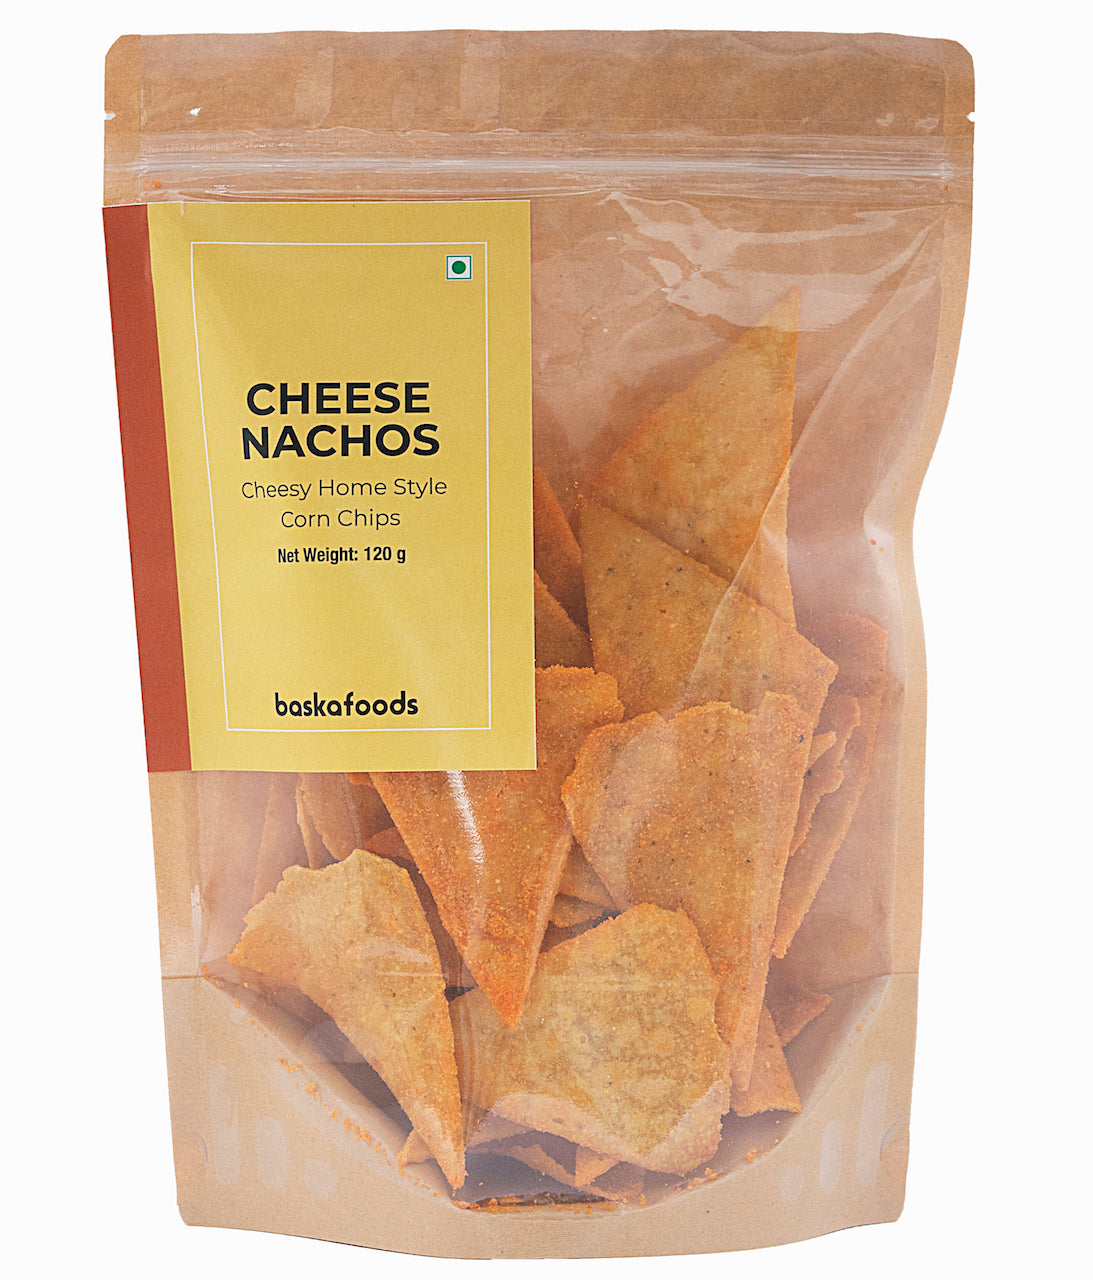 Cheese Nachos